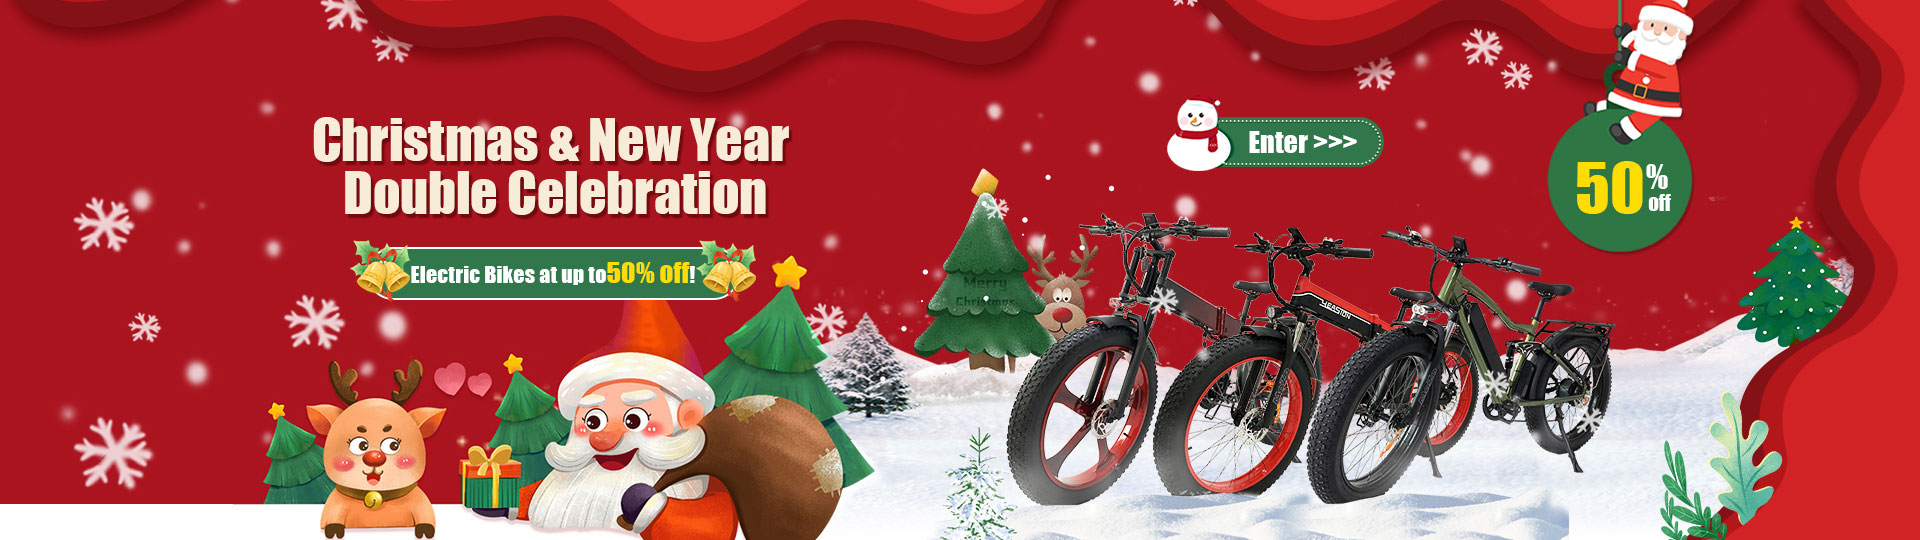 https://www.cyclemixcn.com/news/double-celebration-at-cyclemix-christmas-new-year-special/